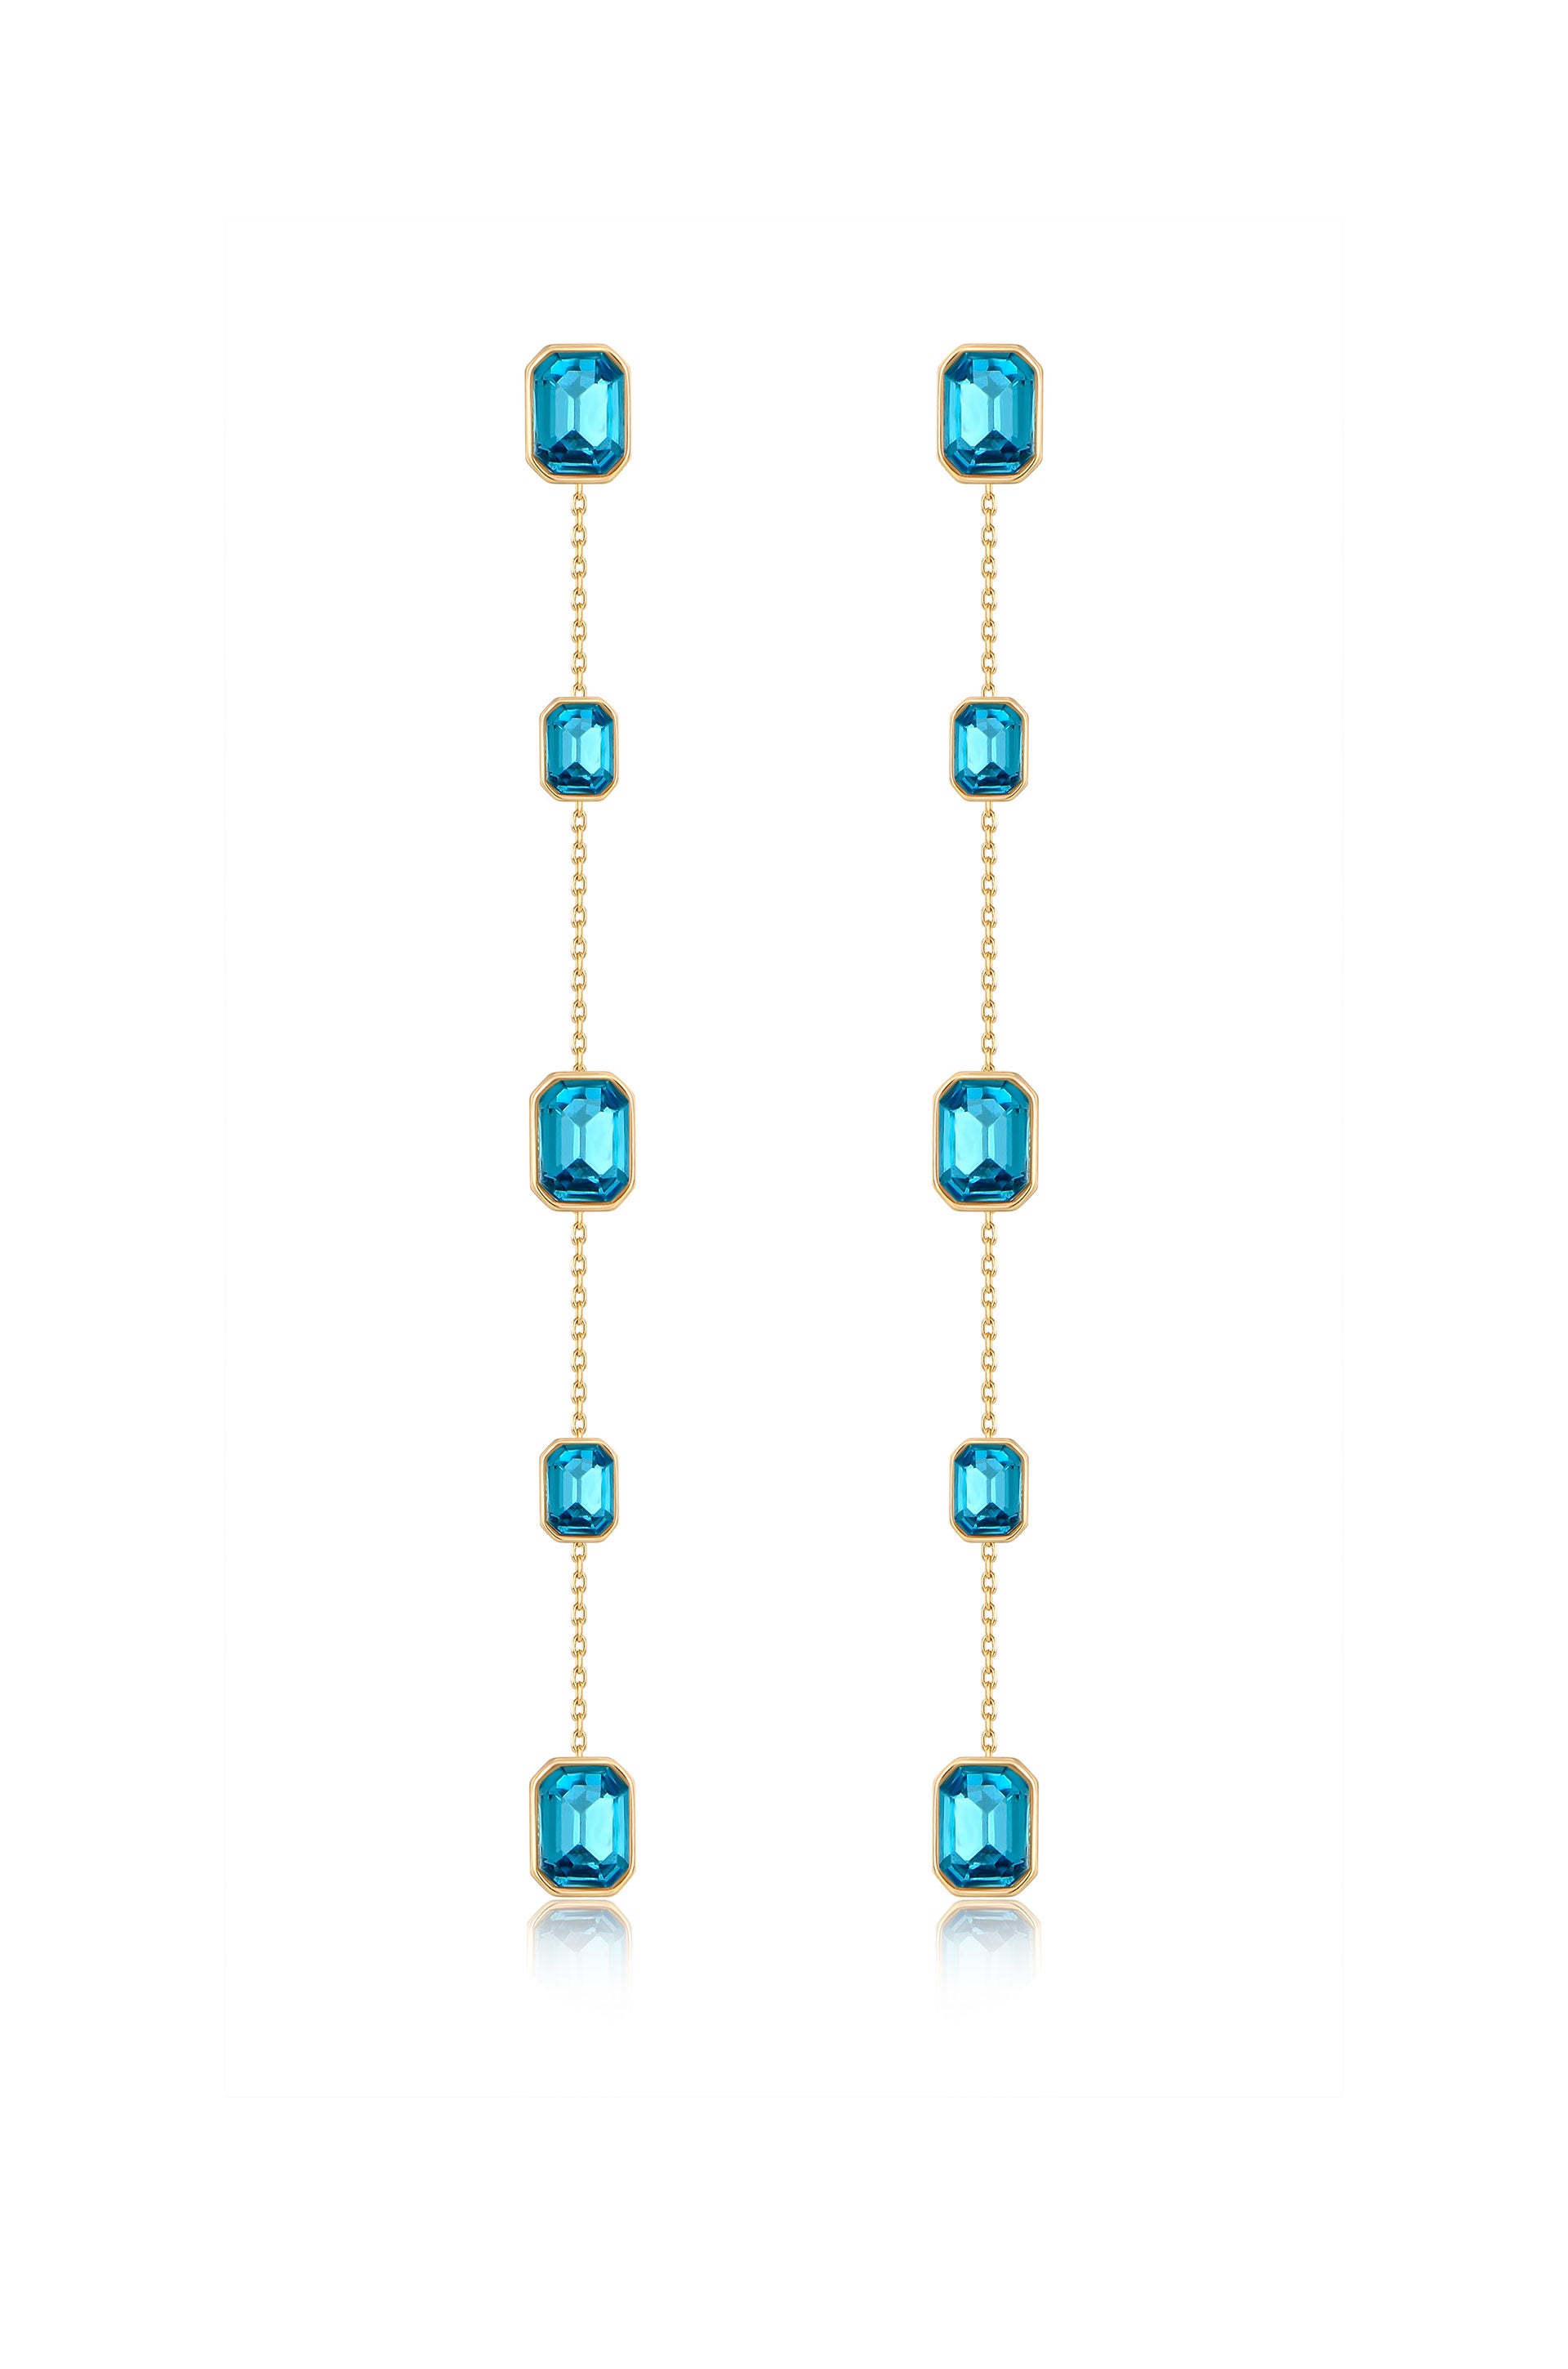 Iconic Crystal Dangle Earrings in aqua crystals